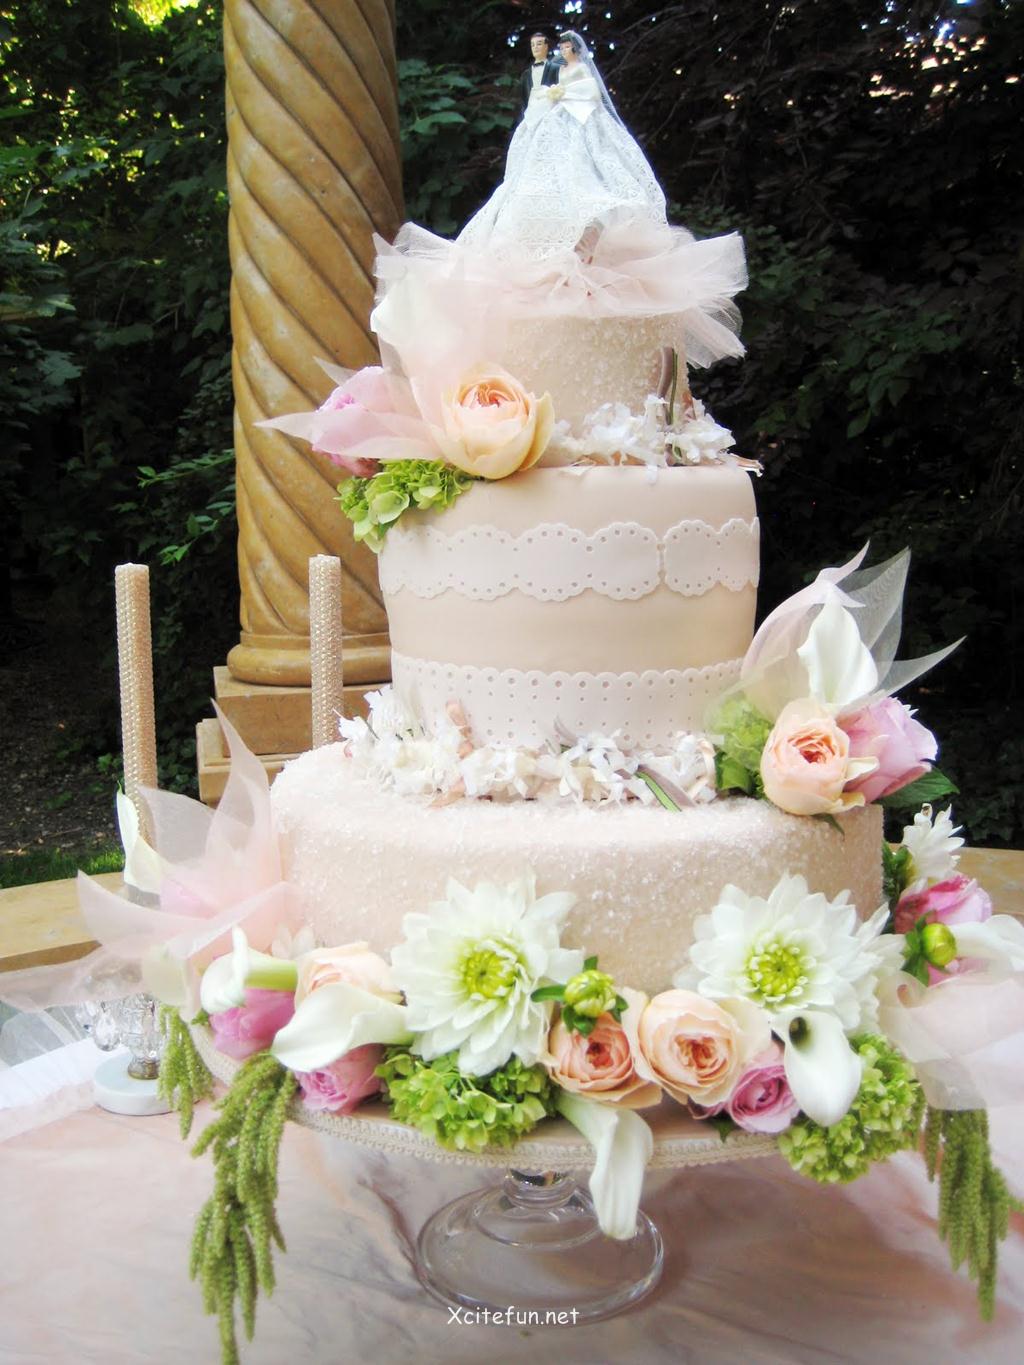 Wedding Cakes - Decorating Ideas - XciteFun.net